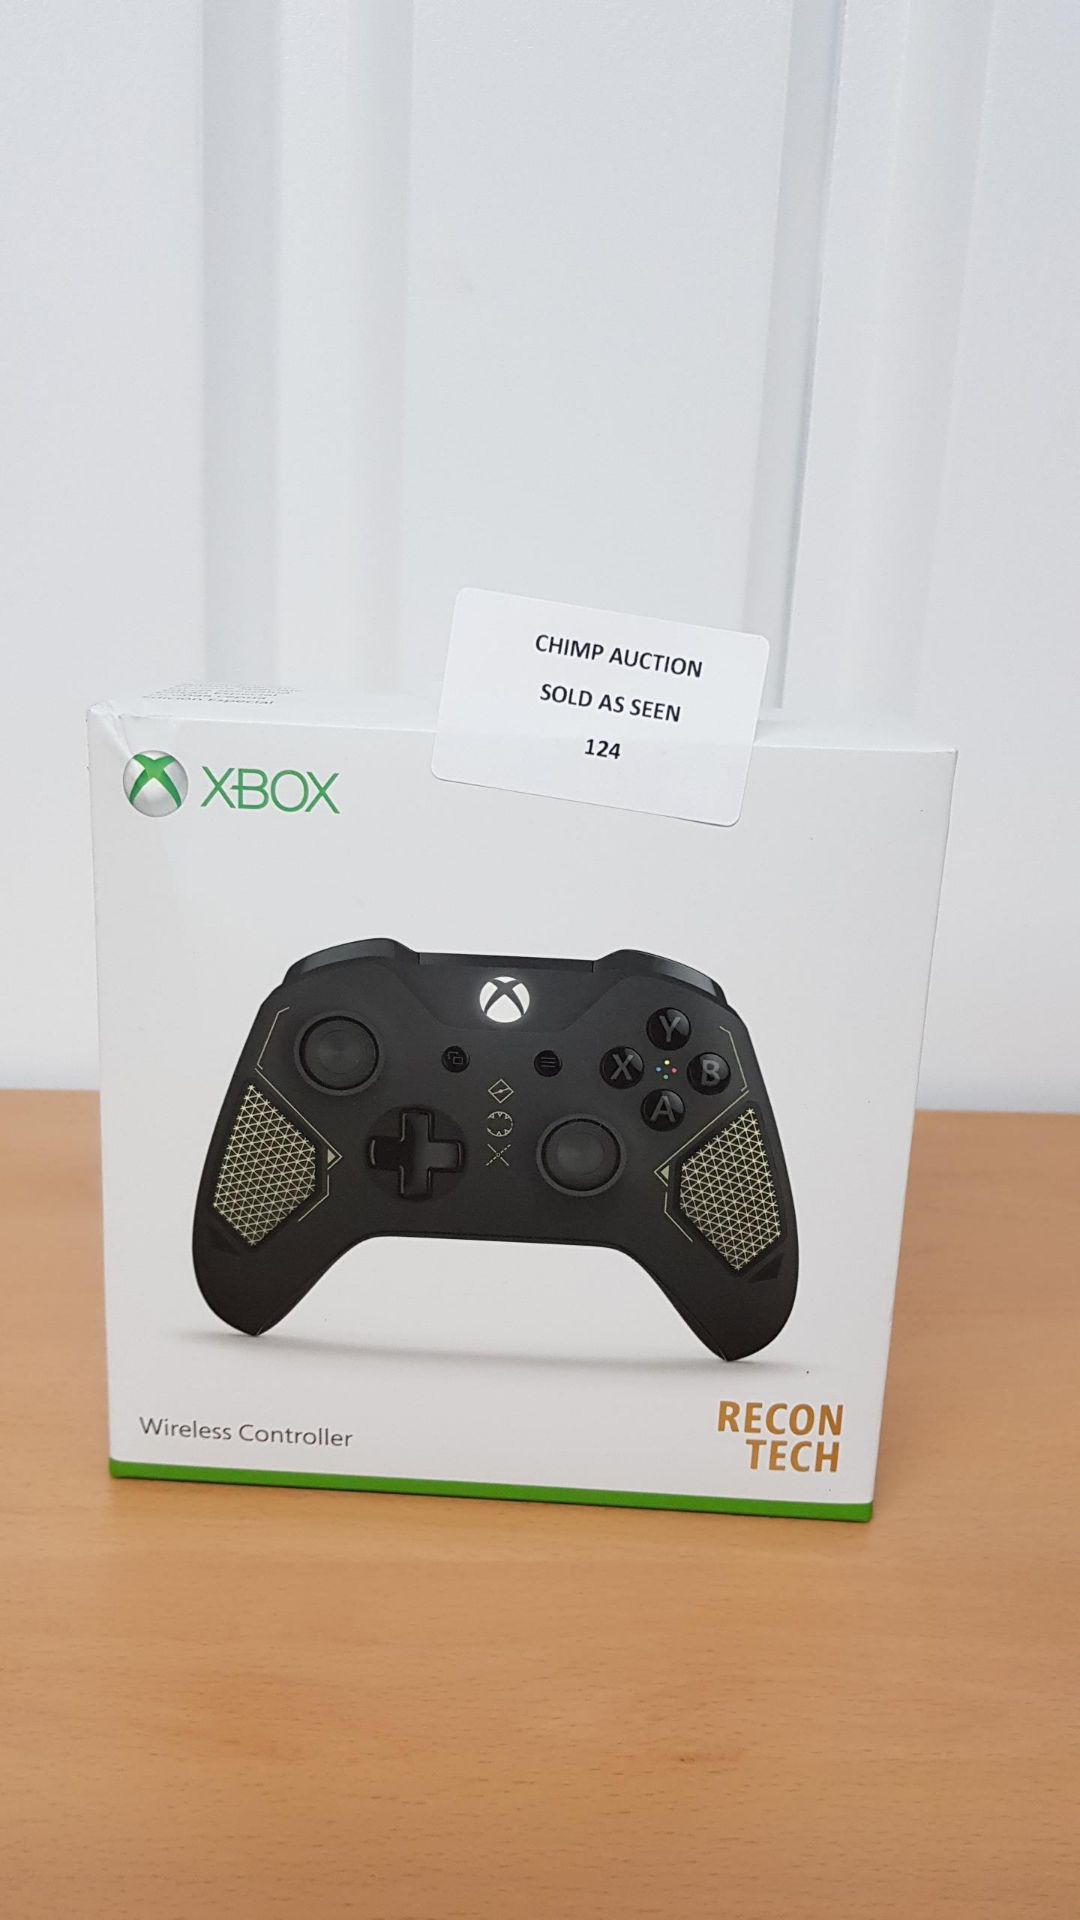 Microsoft Xbox One wireless controller Recon Tech edition RRP £69.99.